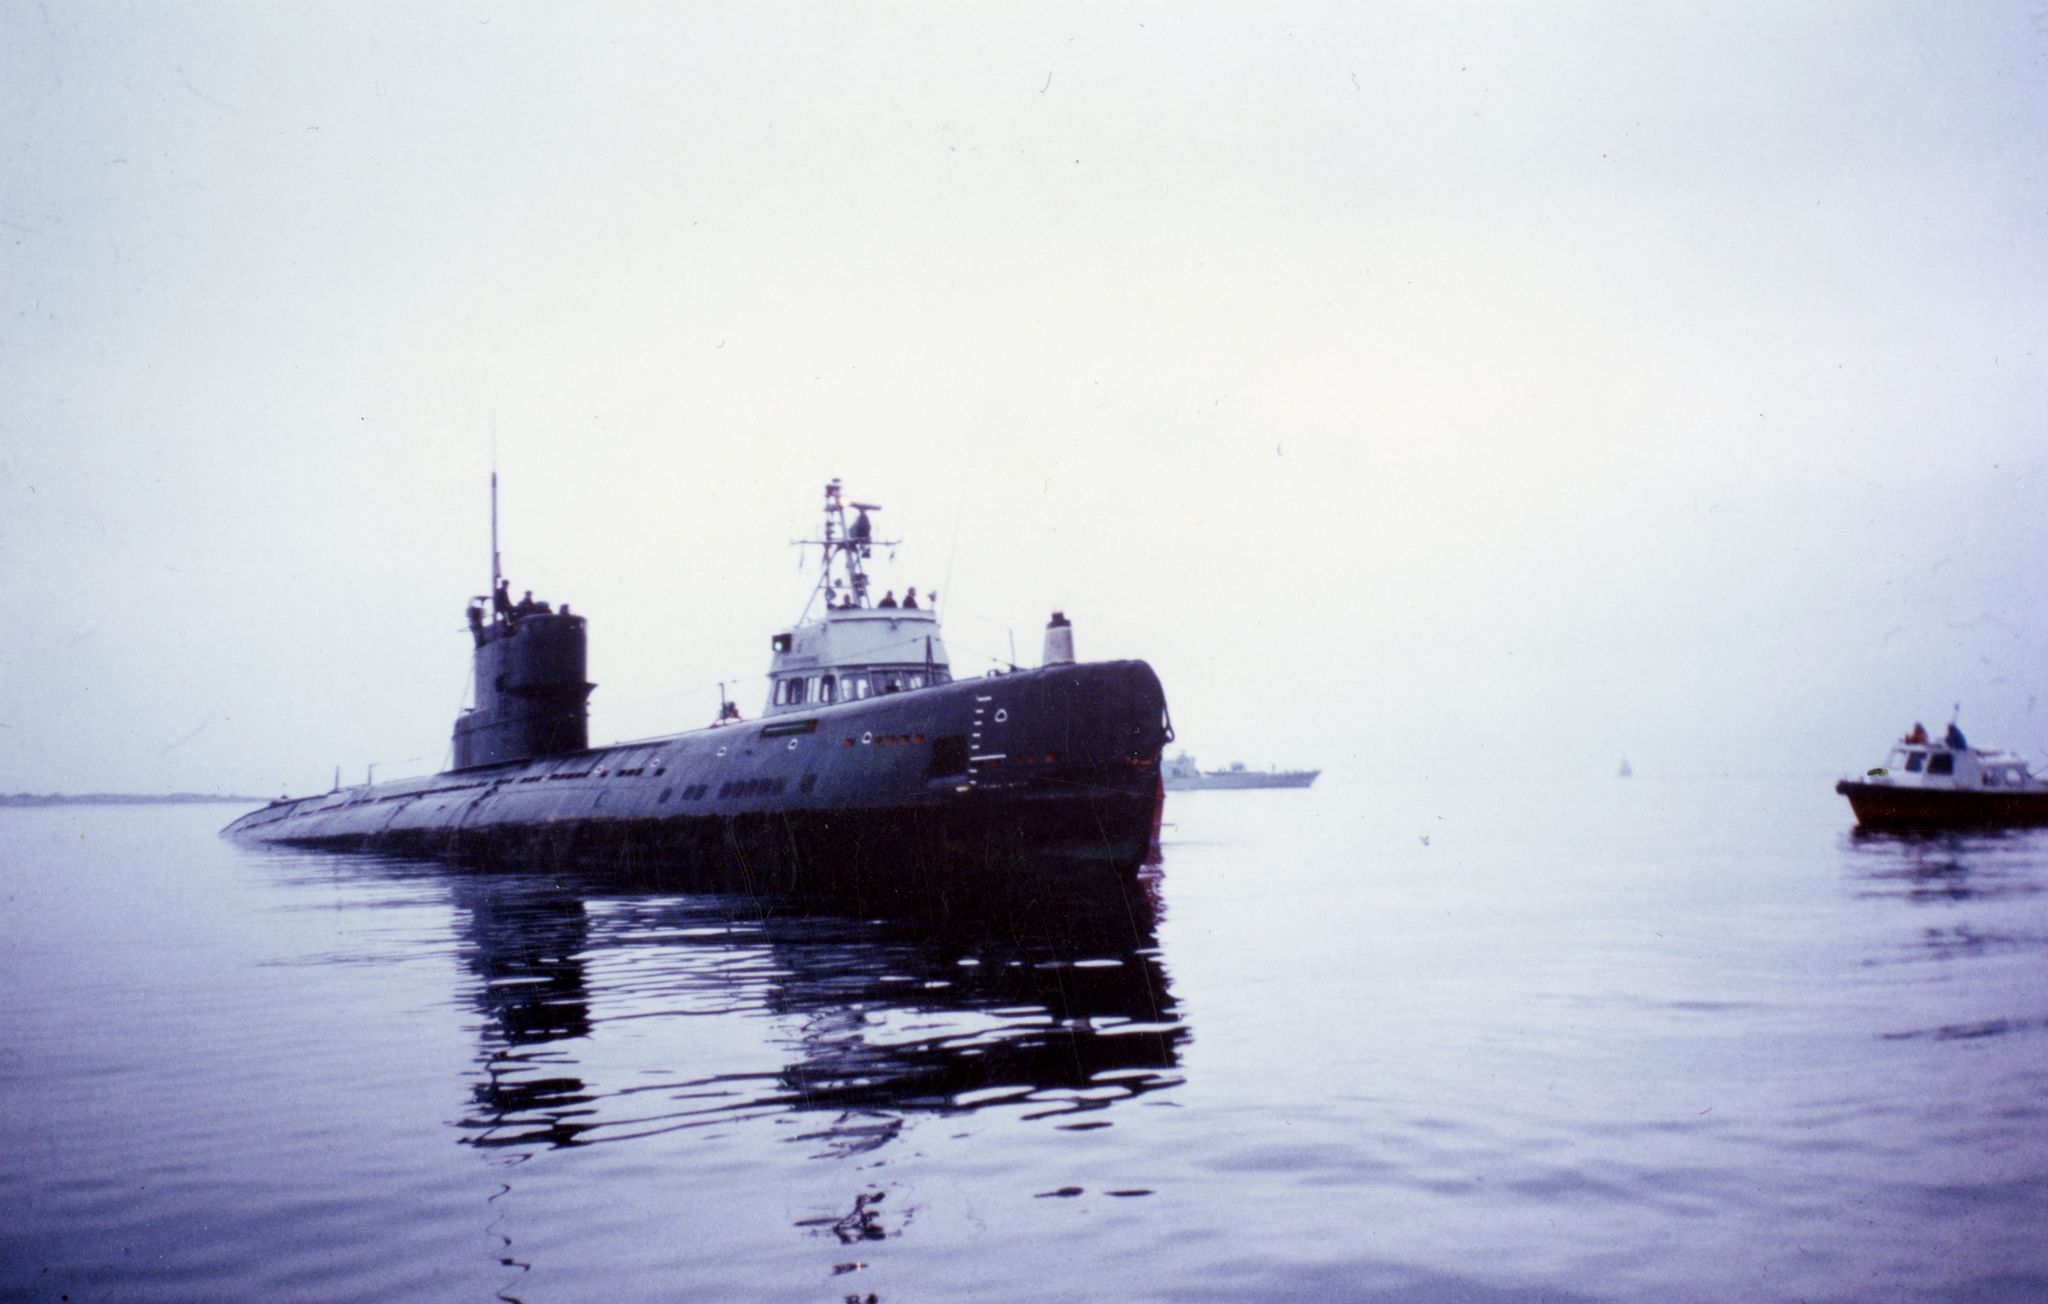 soviet whiskey class submarine s 363 u 137 grounded near swedish torumskar island october 27 1981